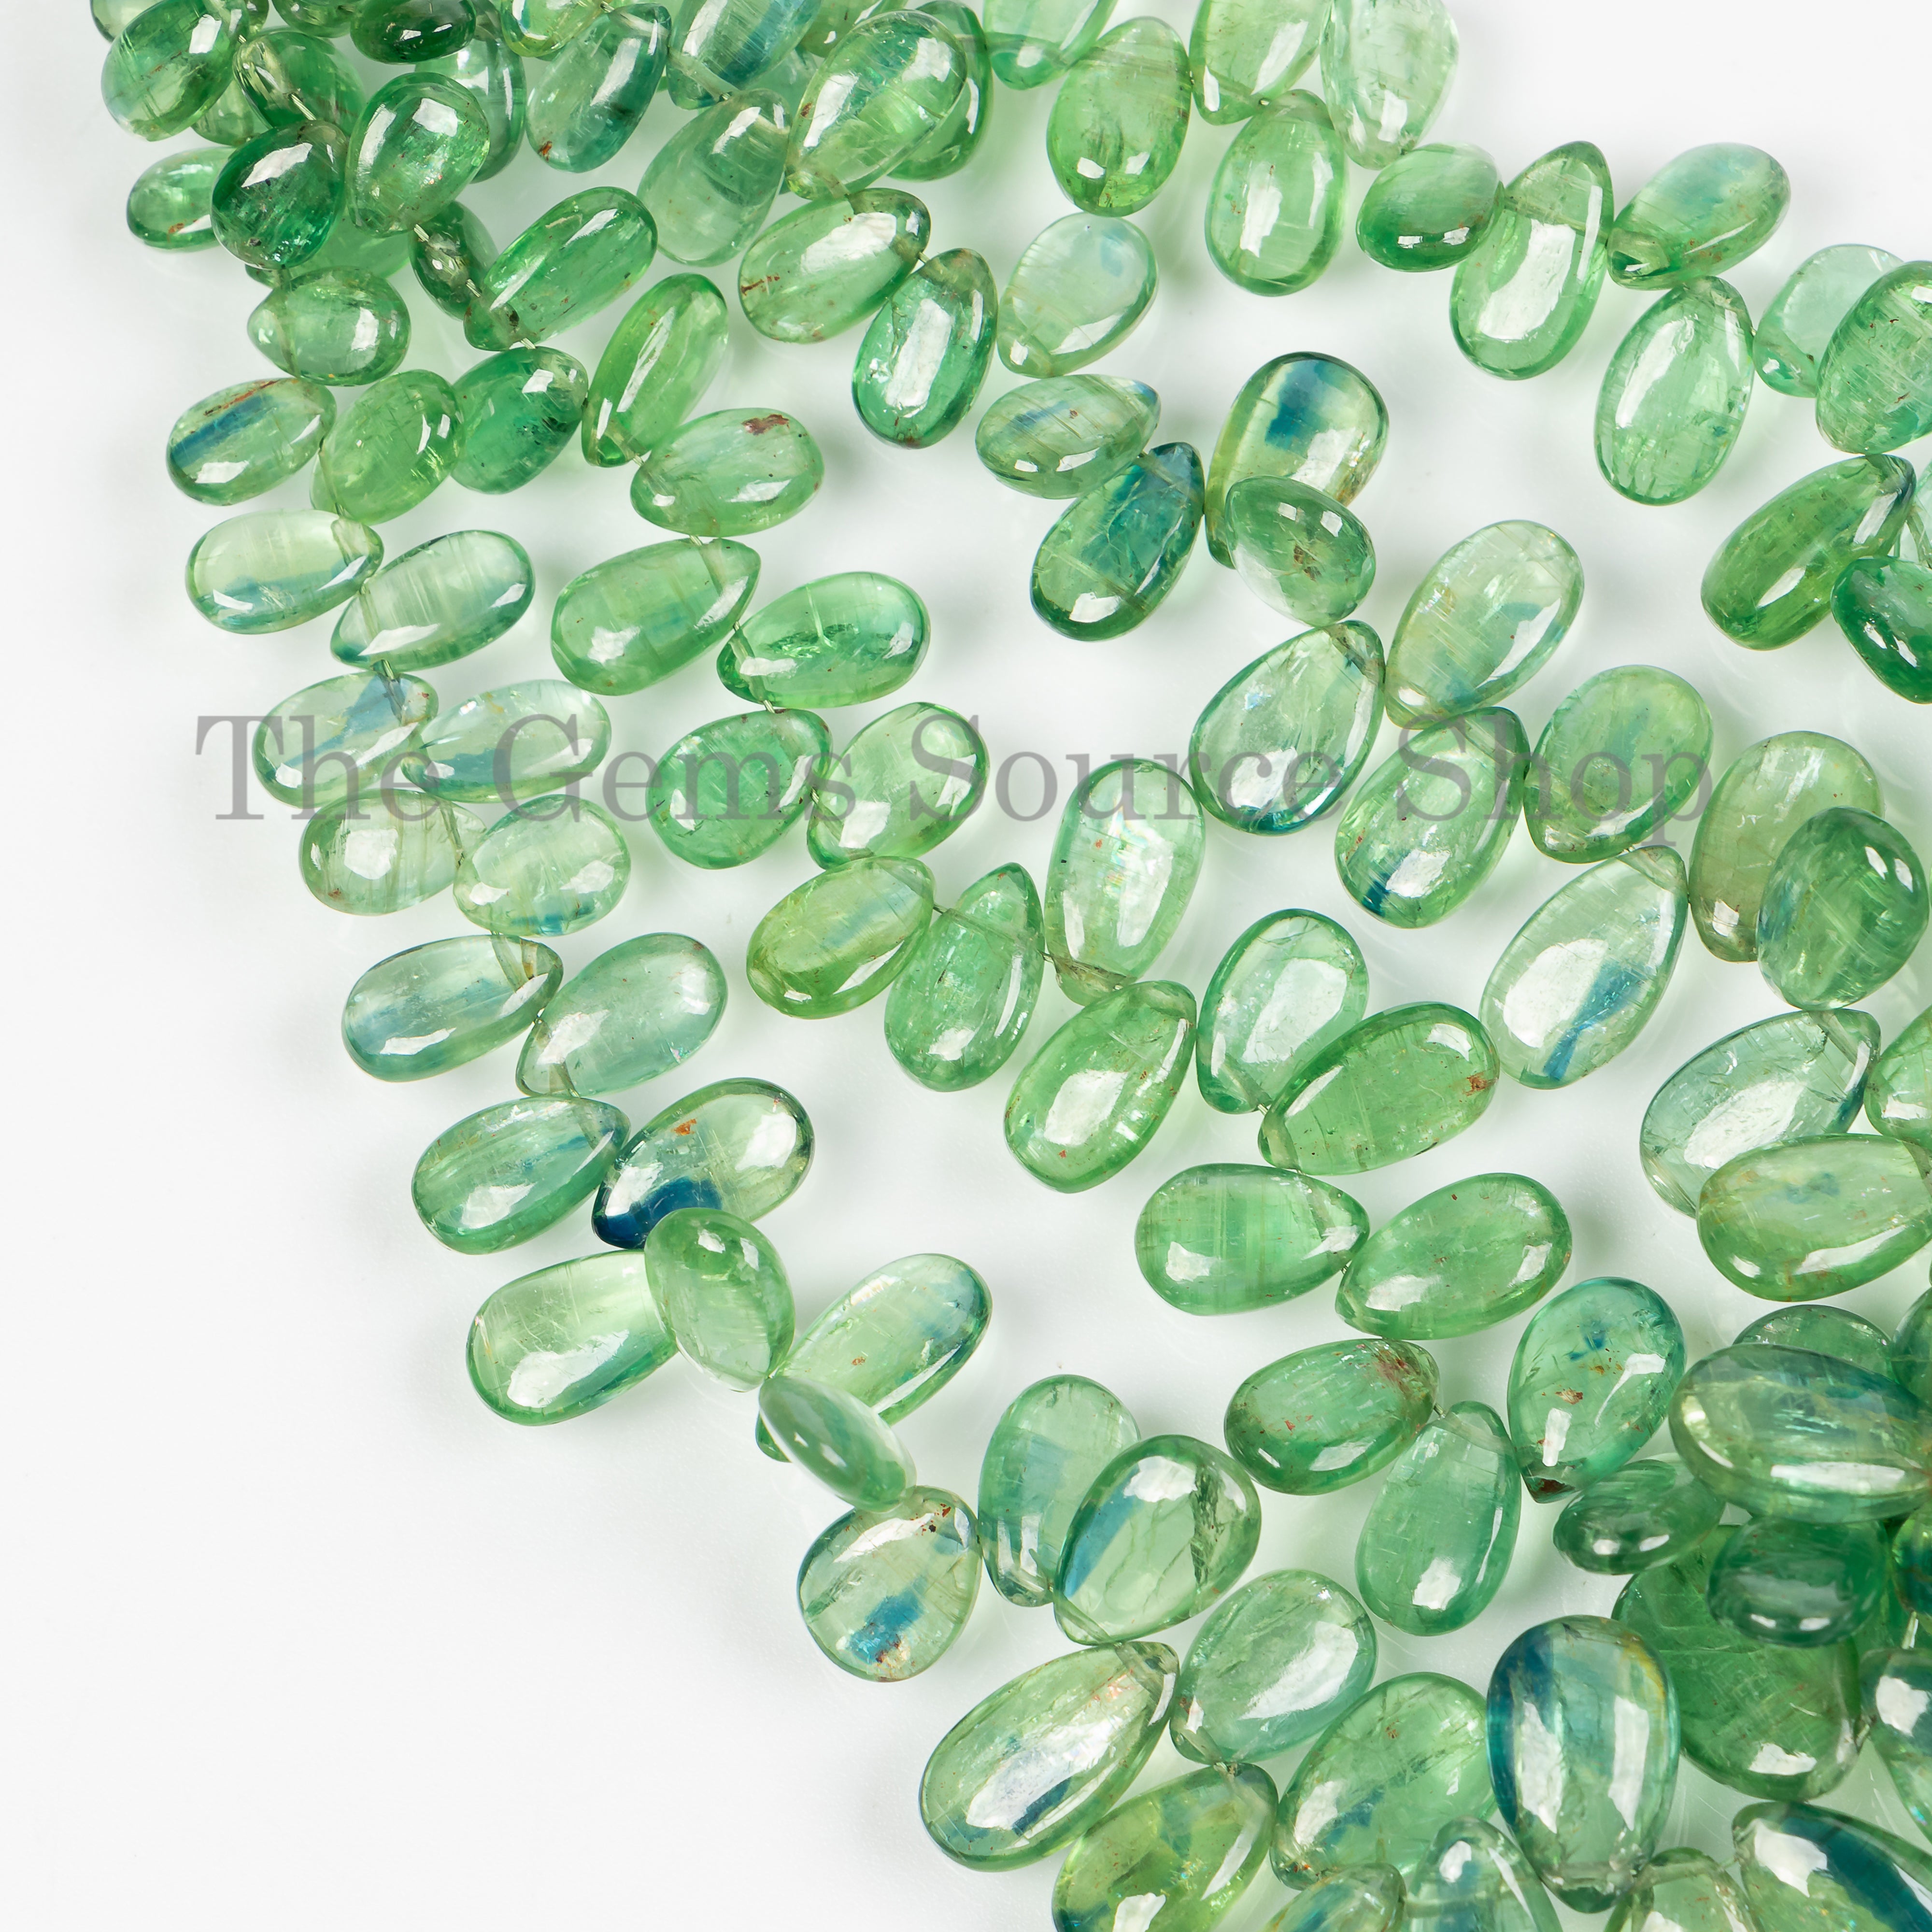 Rare Mint Kyanite Beads, Kyanite Smooth Pear Shape Beads, Kyanite Gemstone Beads